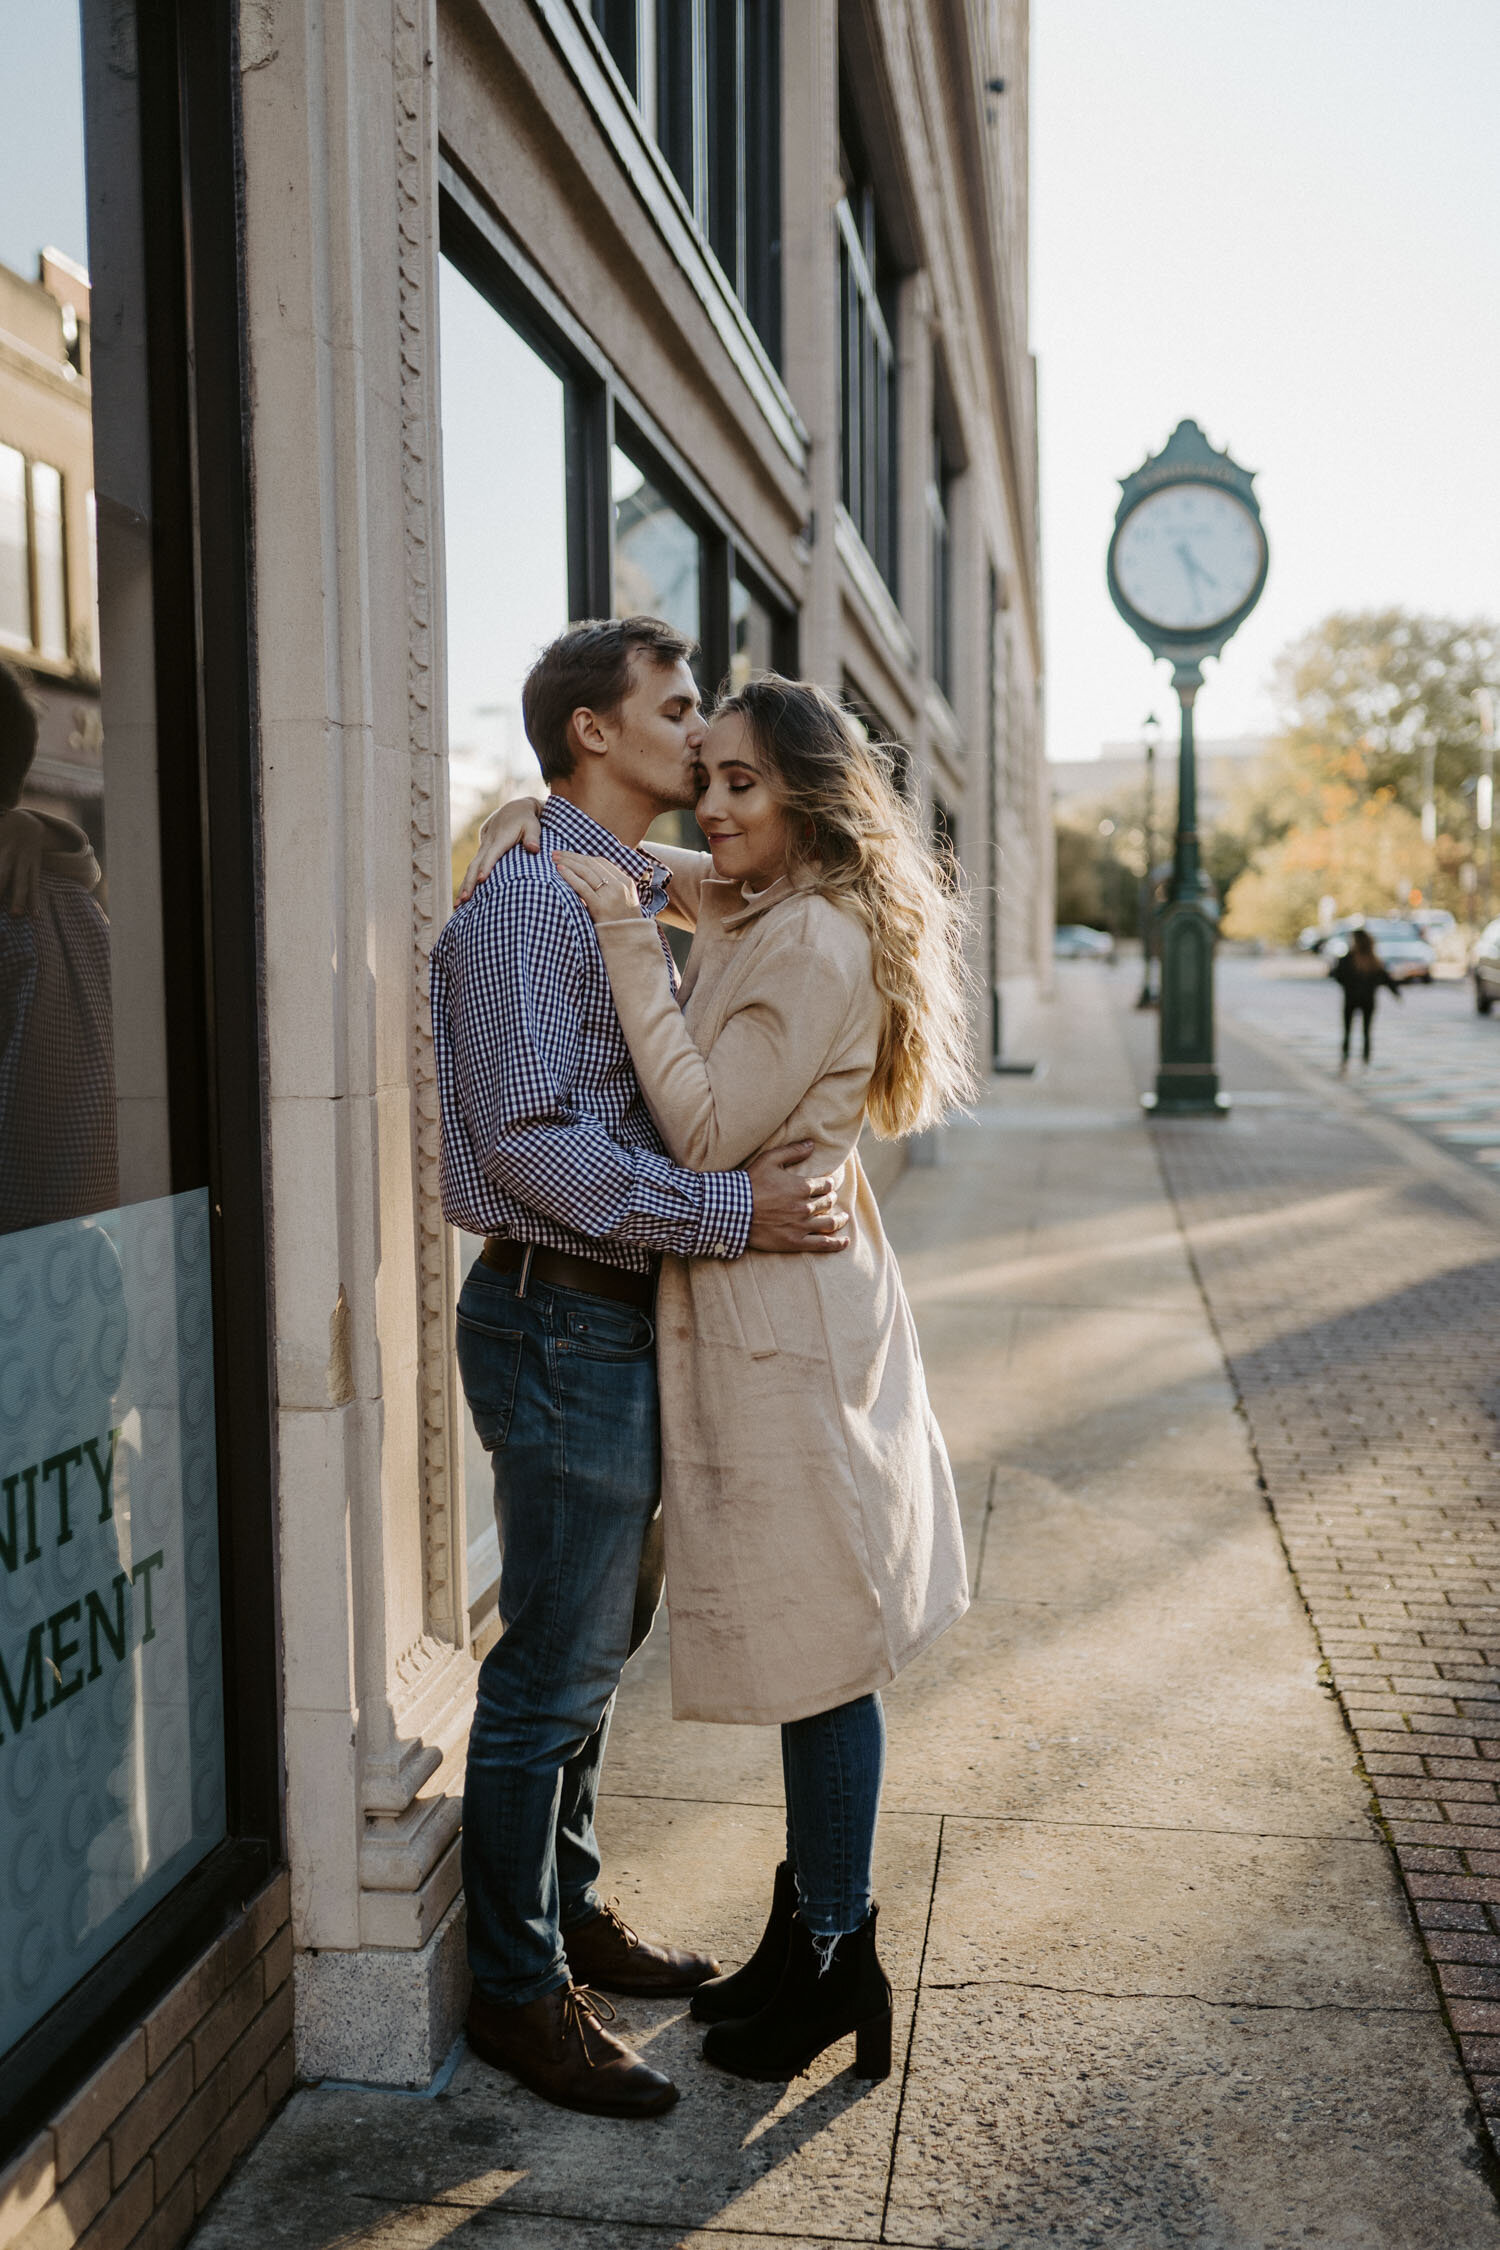 Downtown Greensboro, NC Engagement Session by Kayli LaFon Photography | North Carolina Wedding & Elopement Photographer